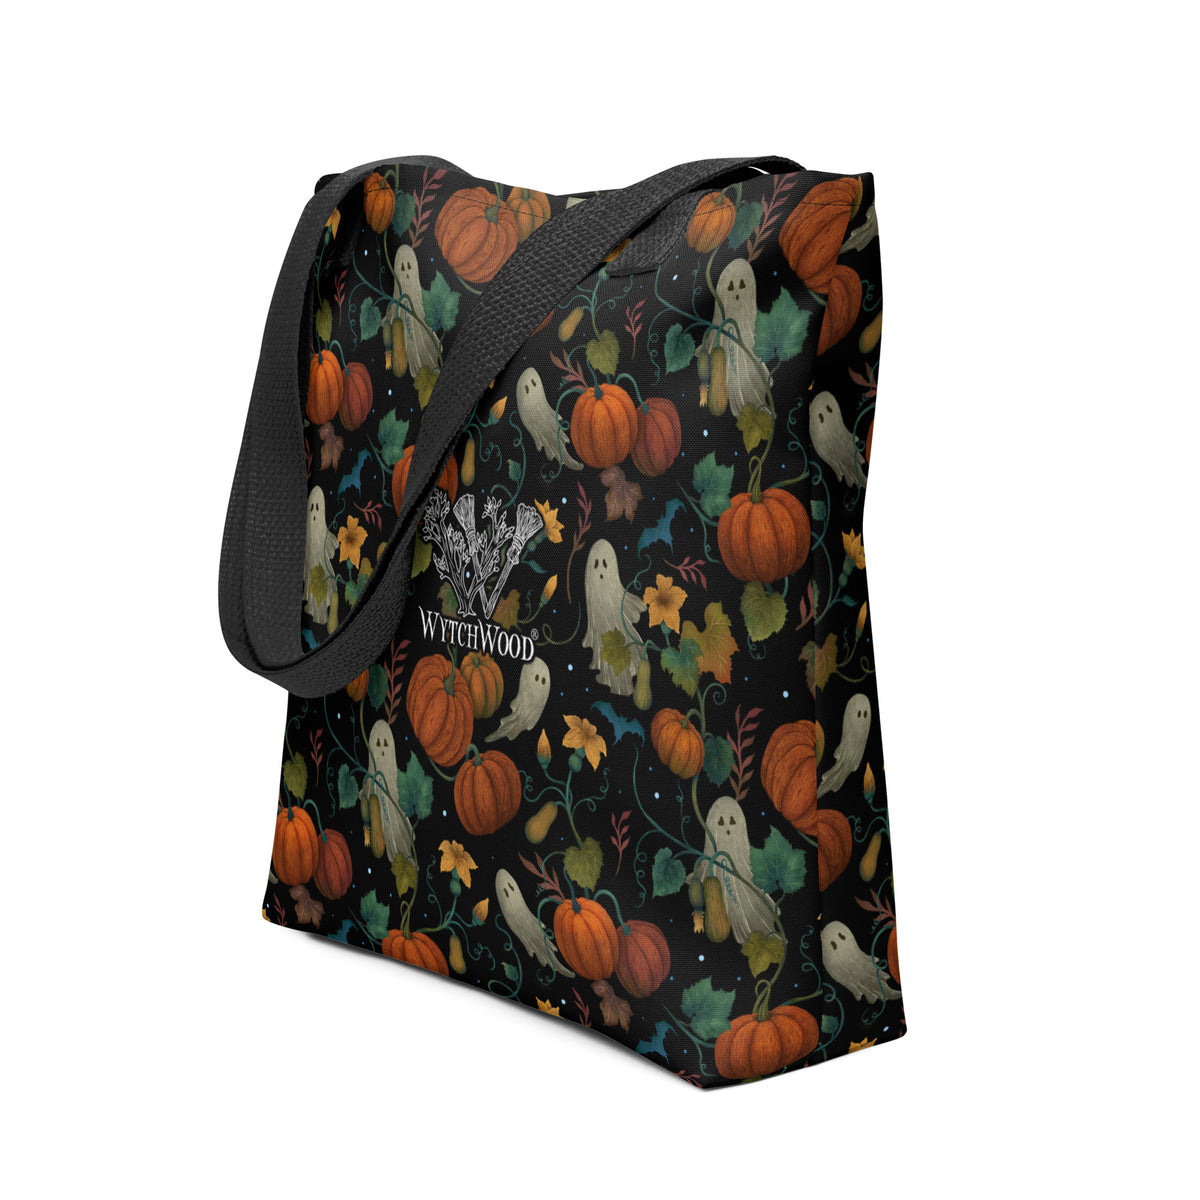 Pumpkin Ghosty Tote Bag